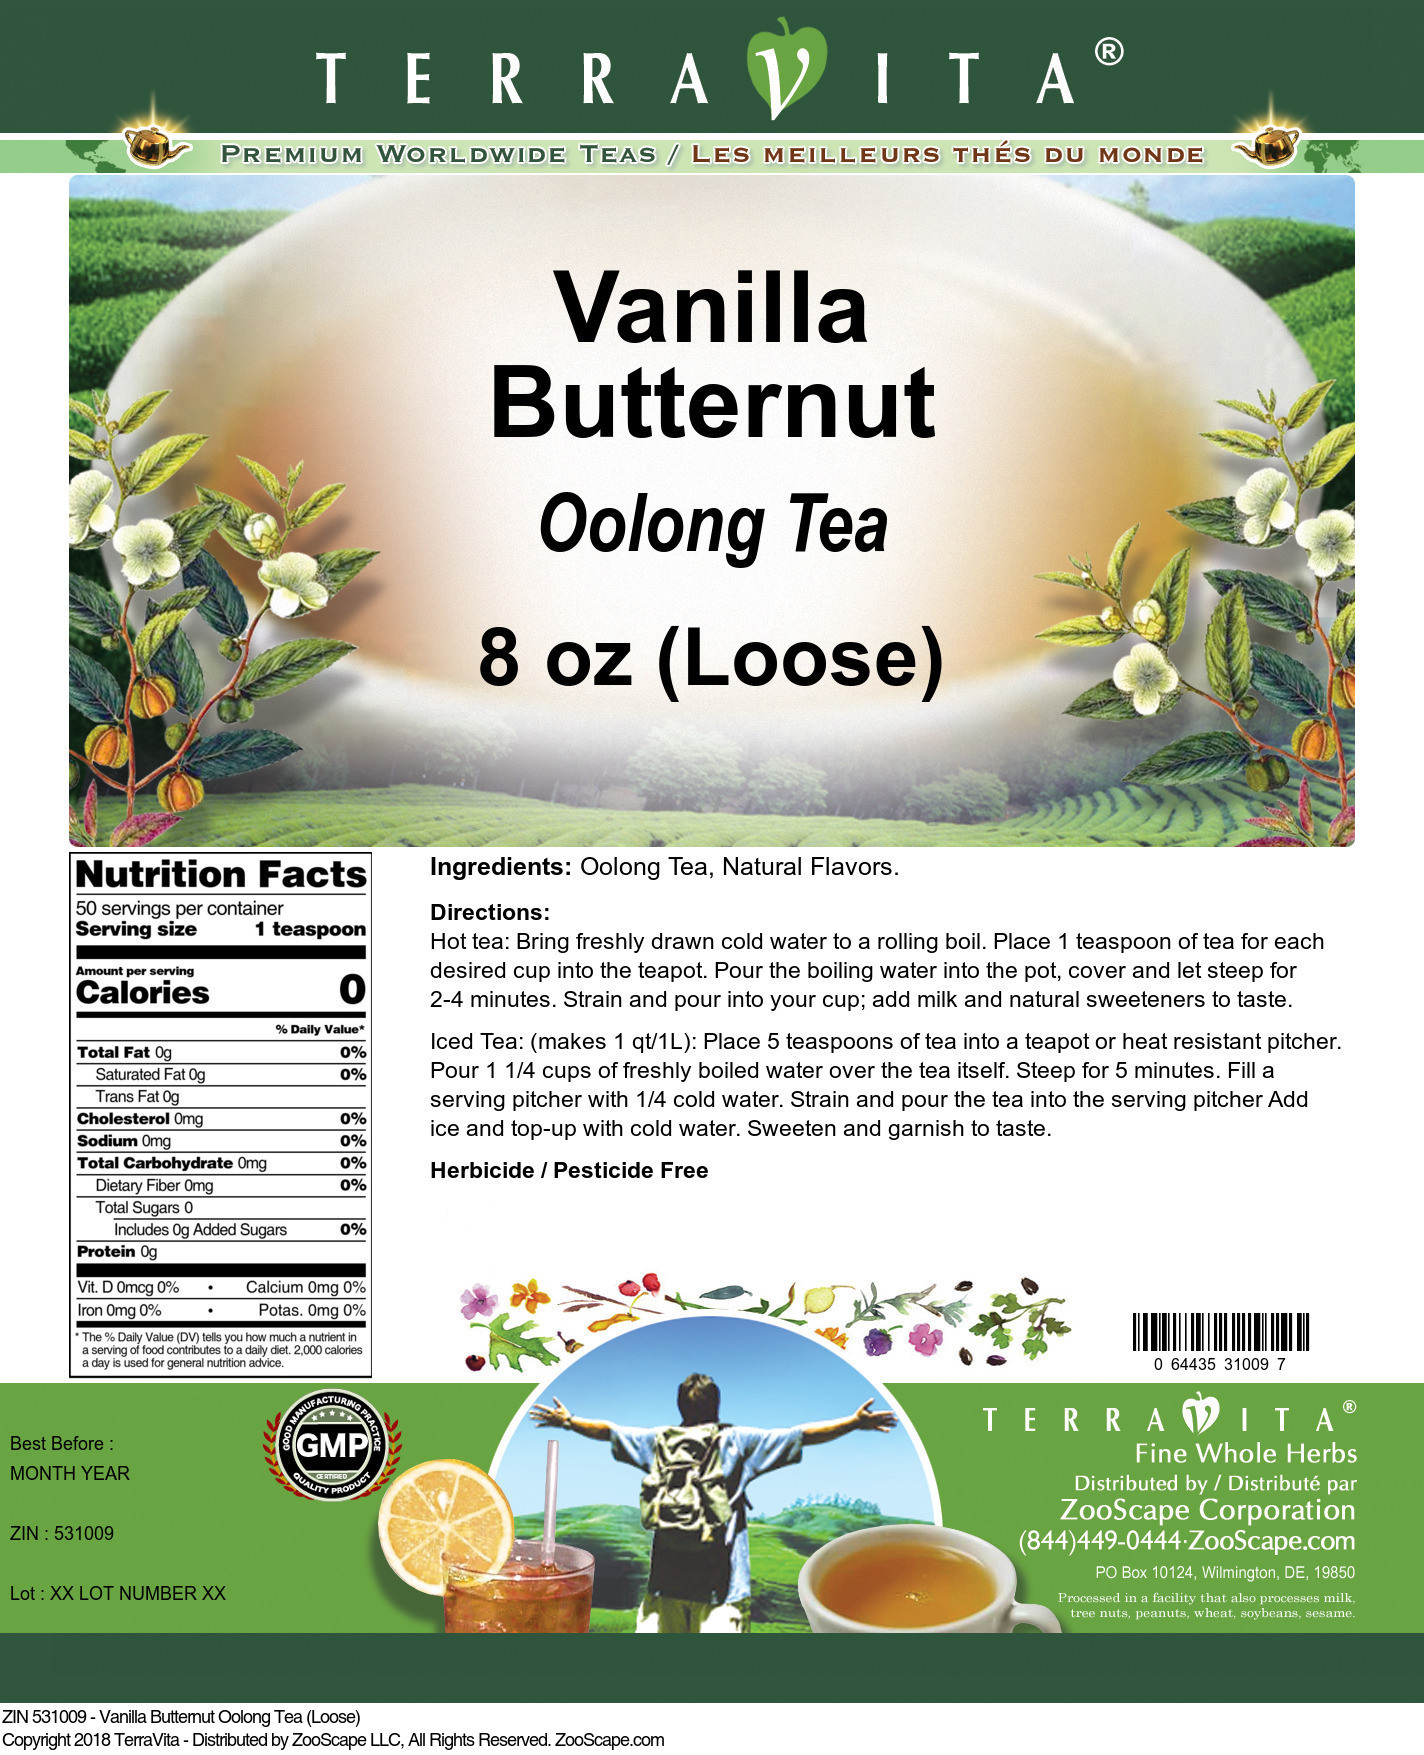 Vanilla Butternut Oolong Tea (Loose) - Label